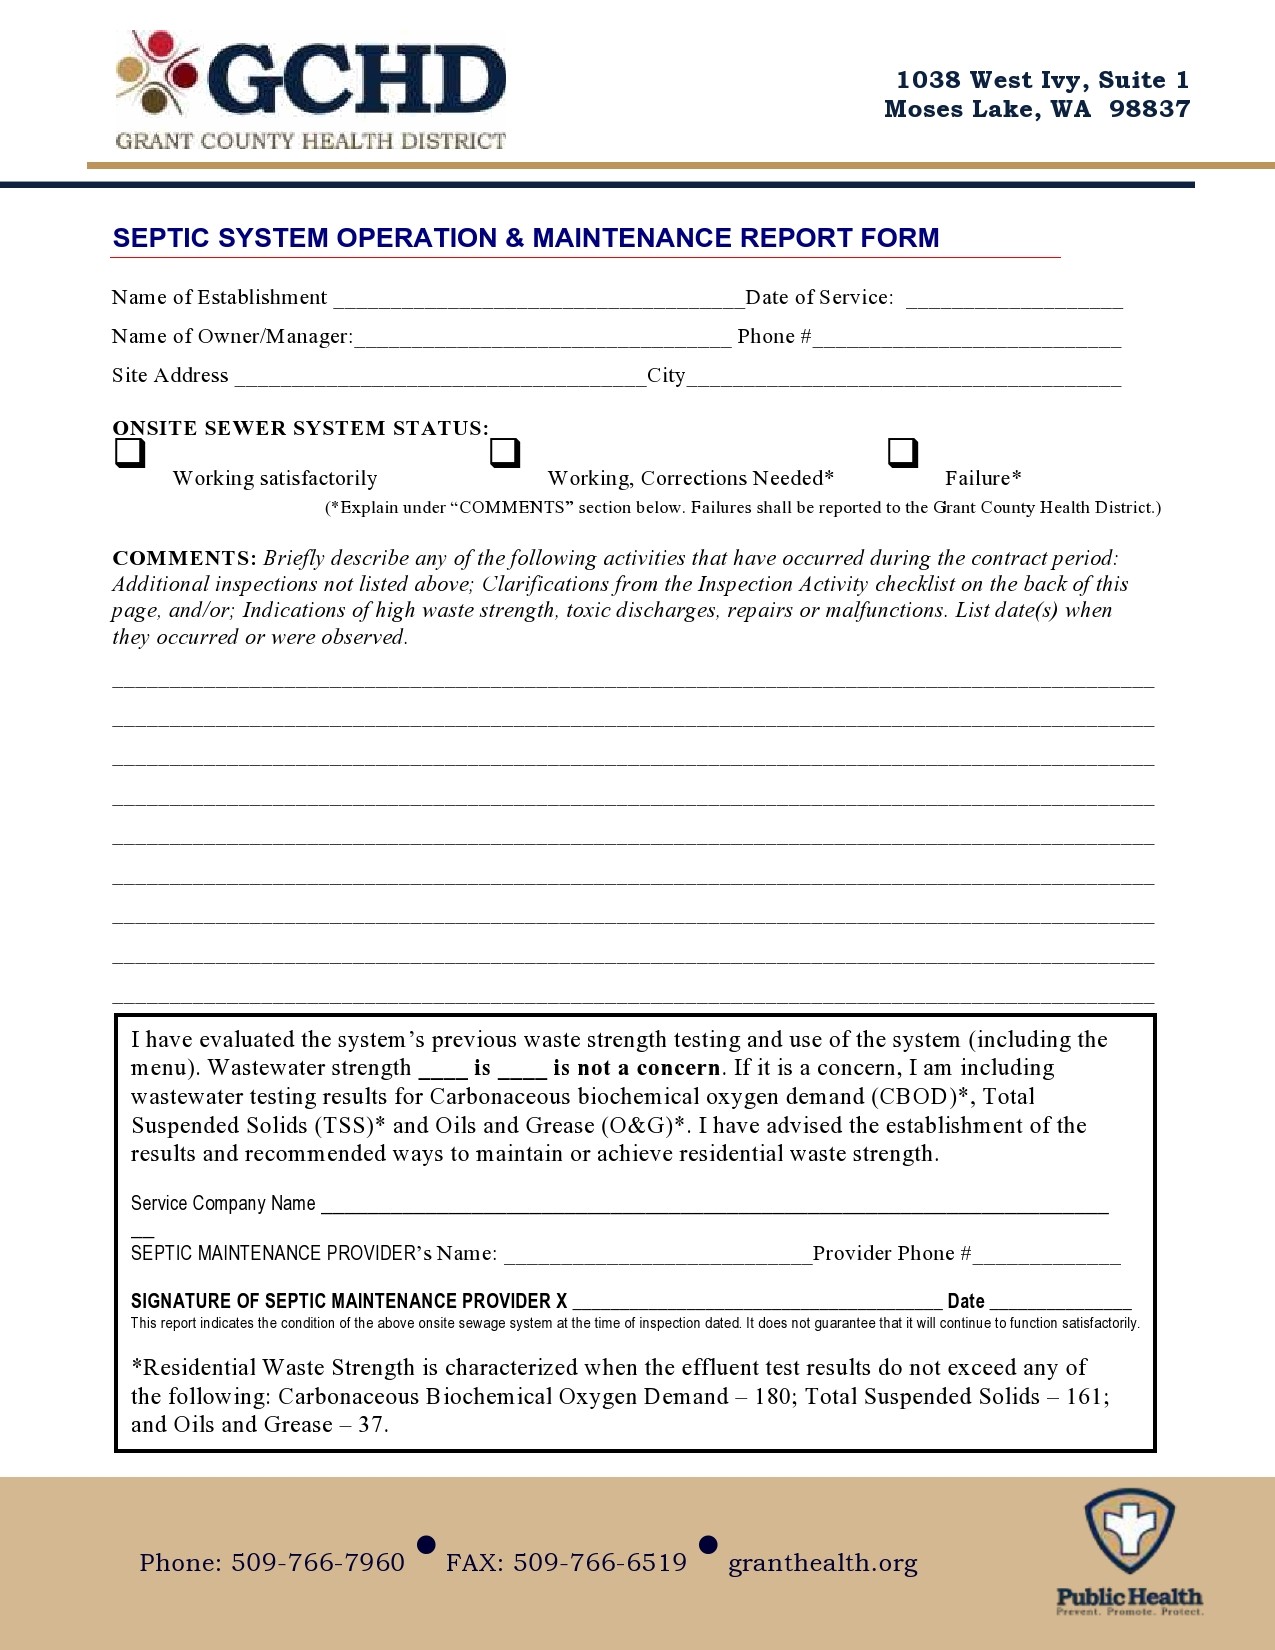 Free maintenance report form 18